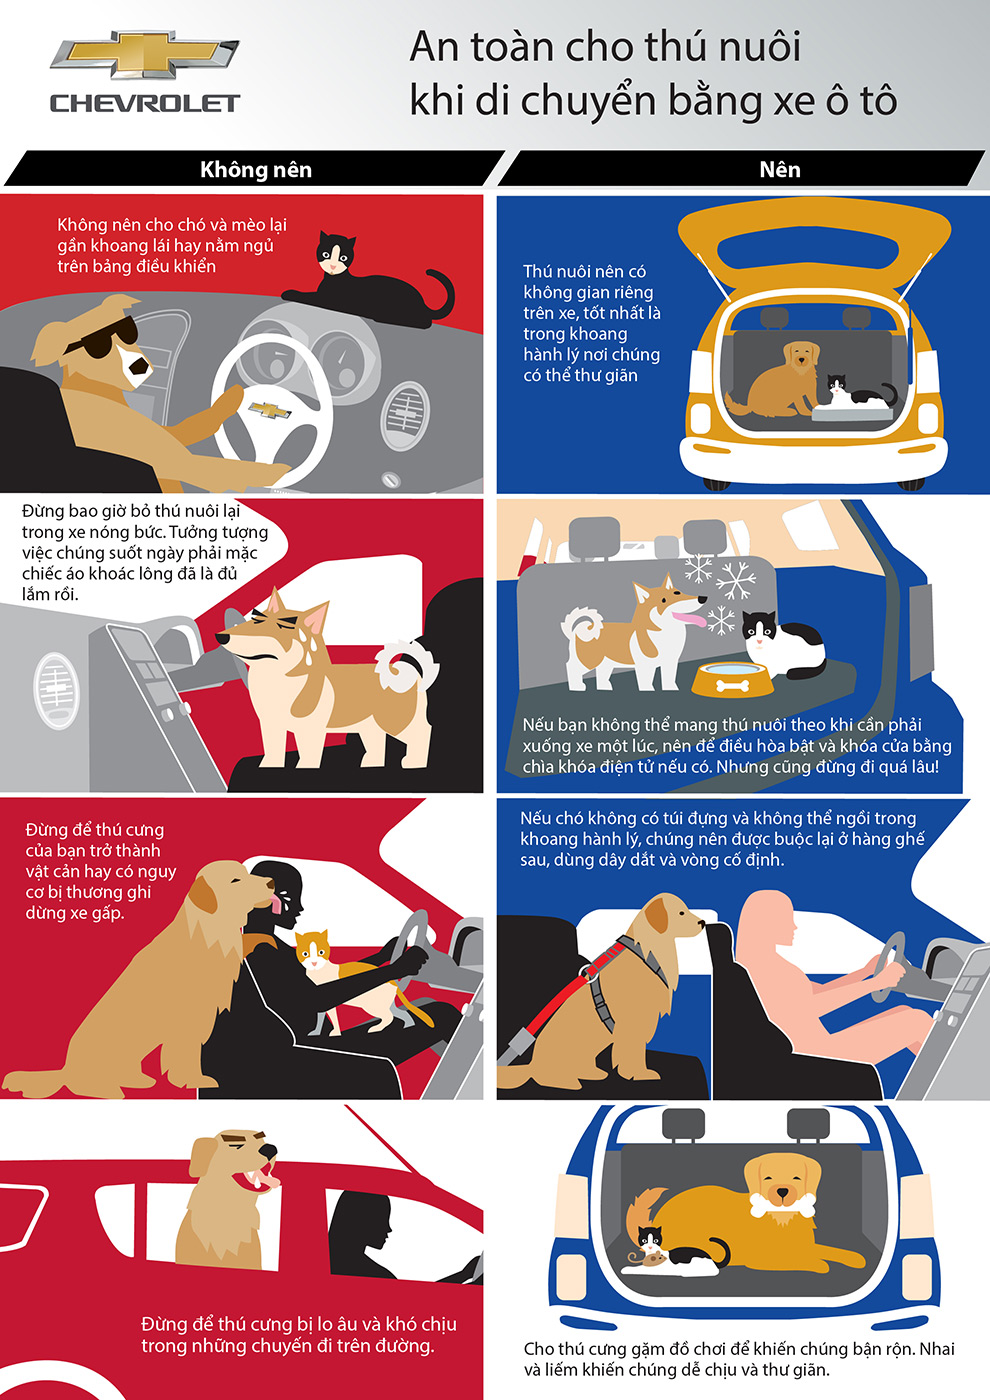 pet-safety-for-car-travel-vn.jpg